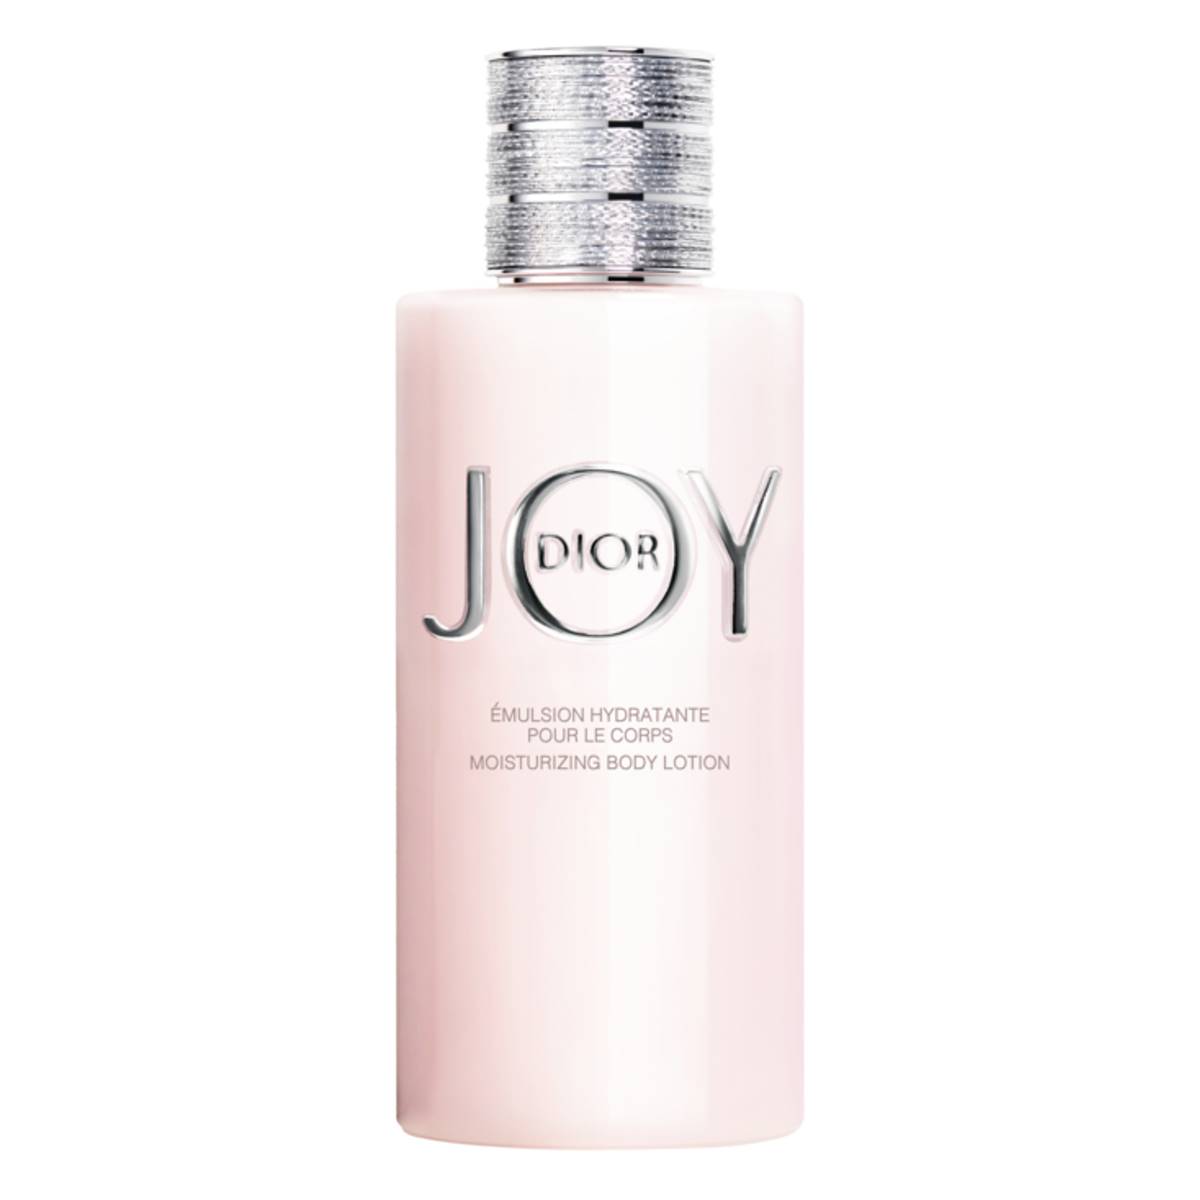 DIOR JOY FOR WOMEN BODY LOTION 200ML - samawa perfumes 